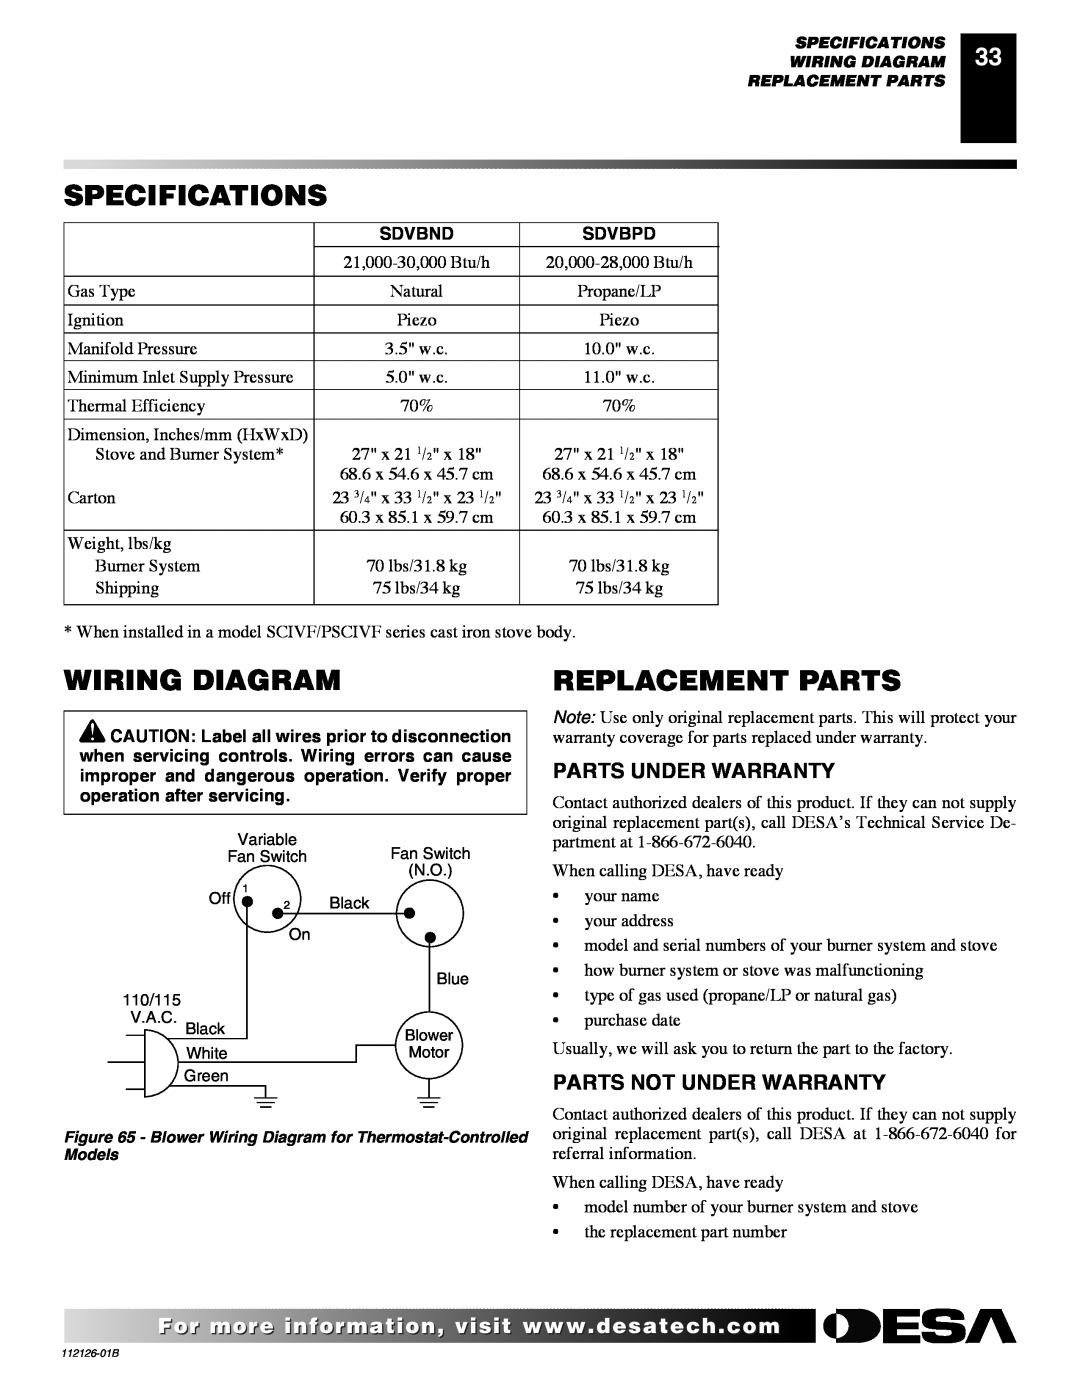 Desa SDVBPD, SDVBND Specifications, Wiring Diagram, Replacement Parts, Parts Under Warranty, Parts Not Under Warranty 